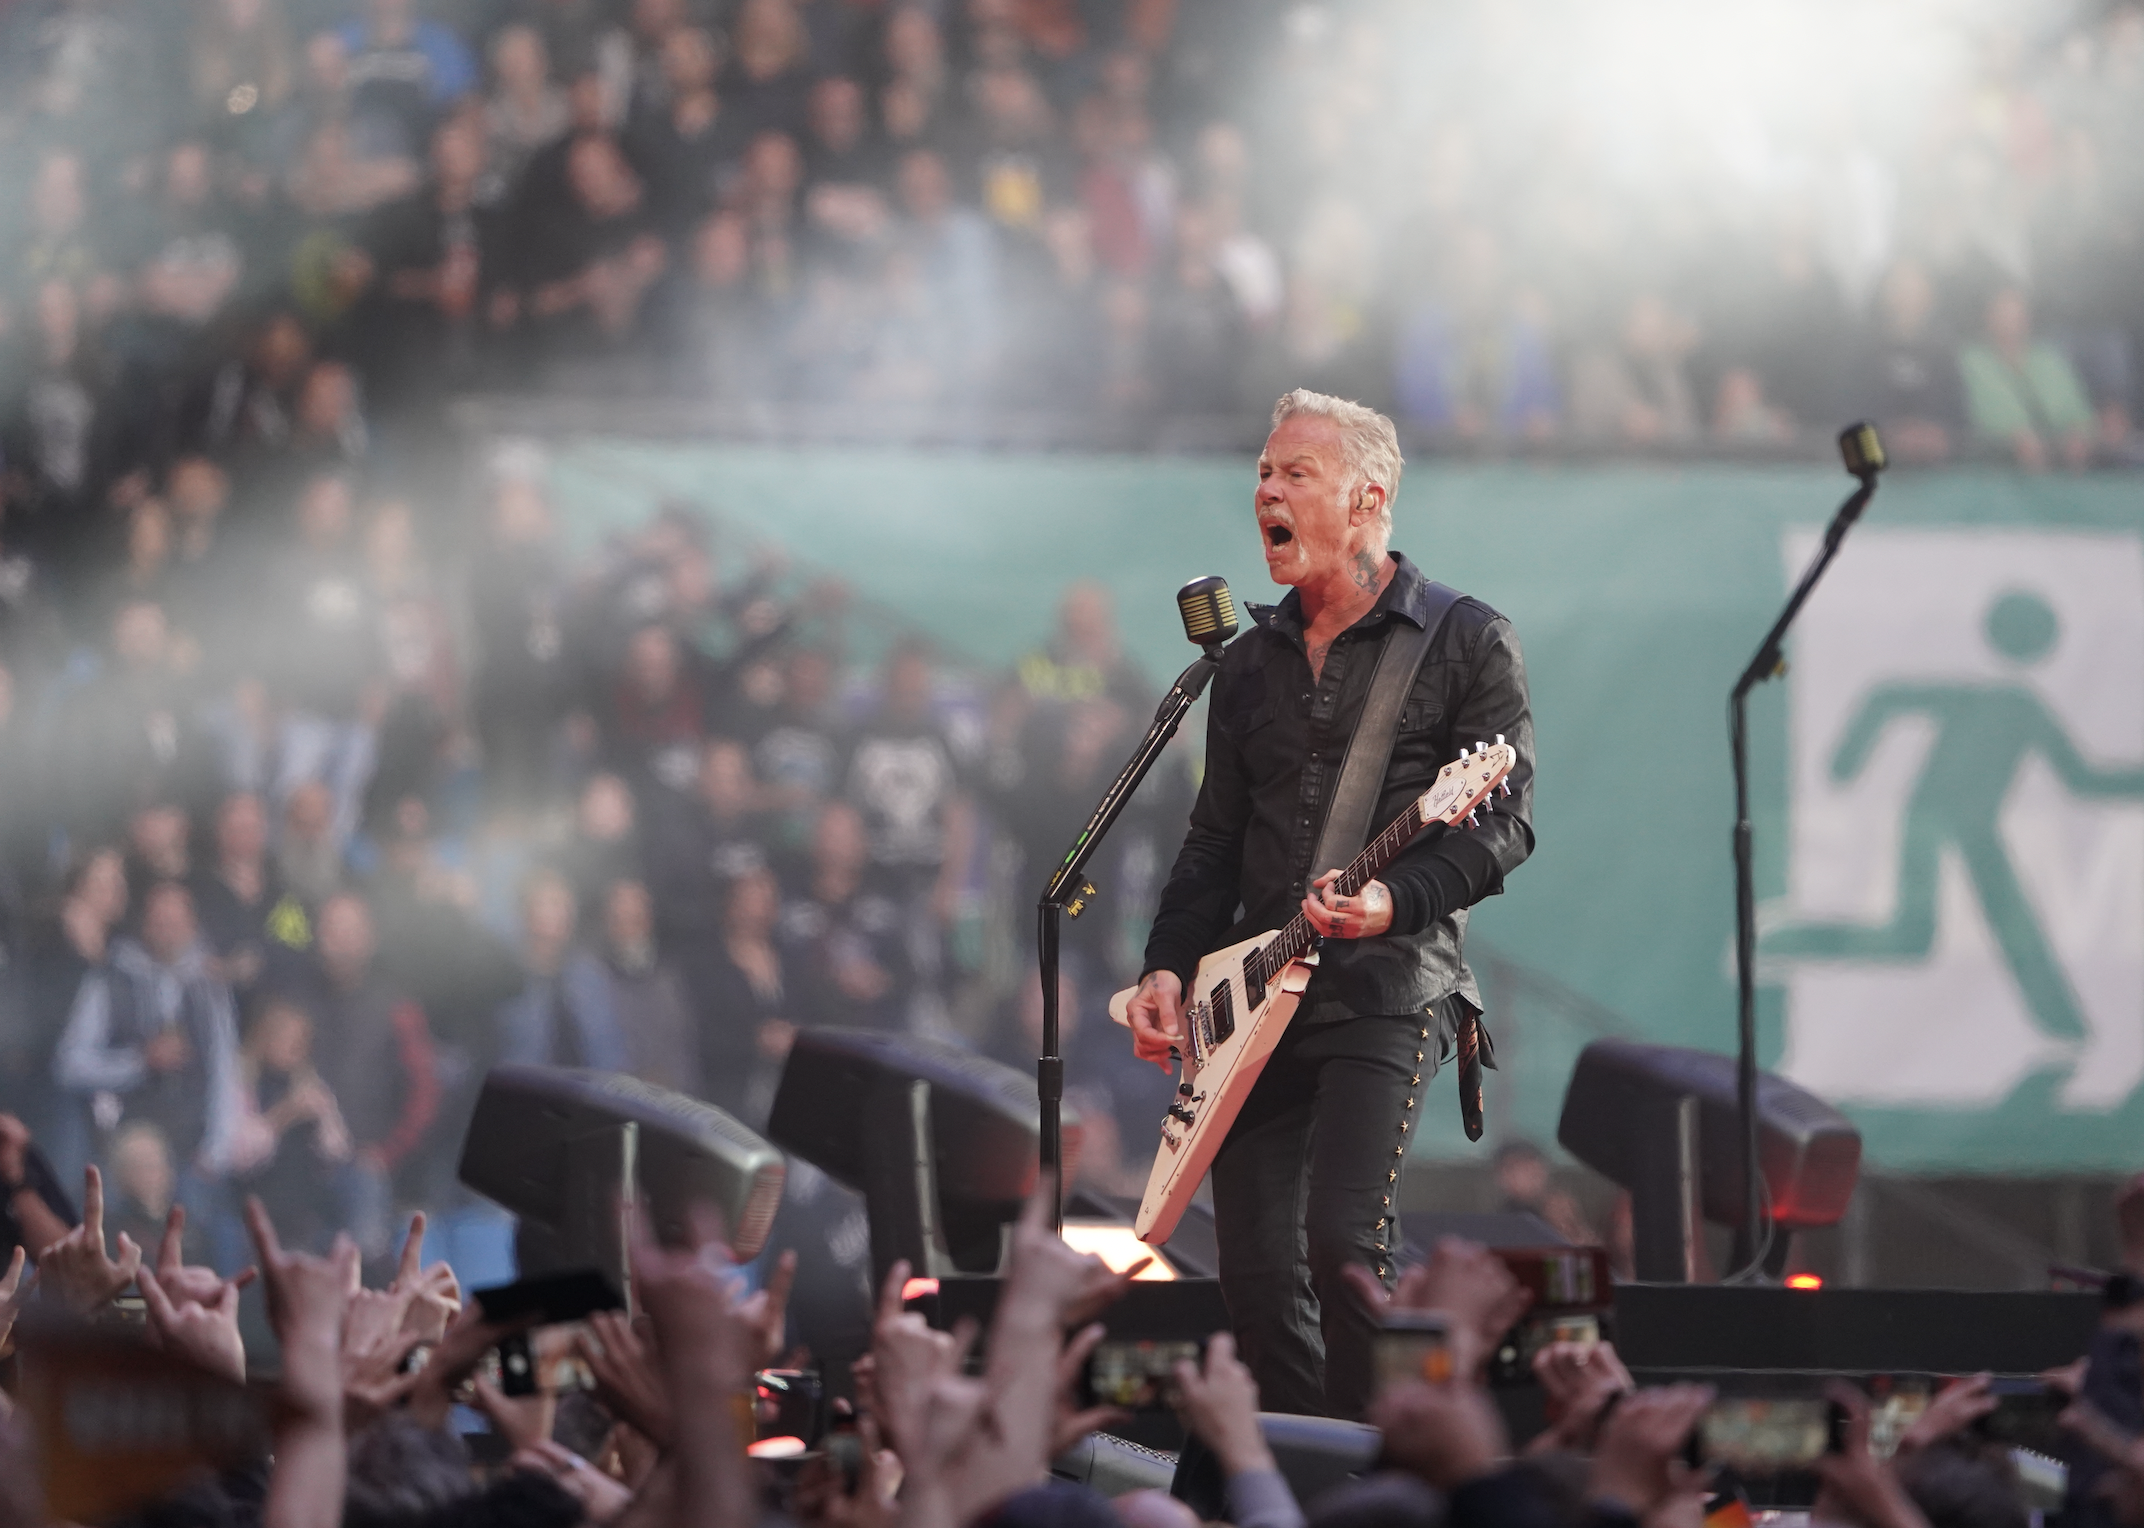 Singer James Hetfield of the band Metallica sings on stage at Volksparkstadion.